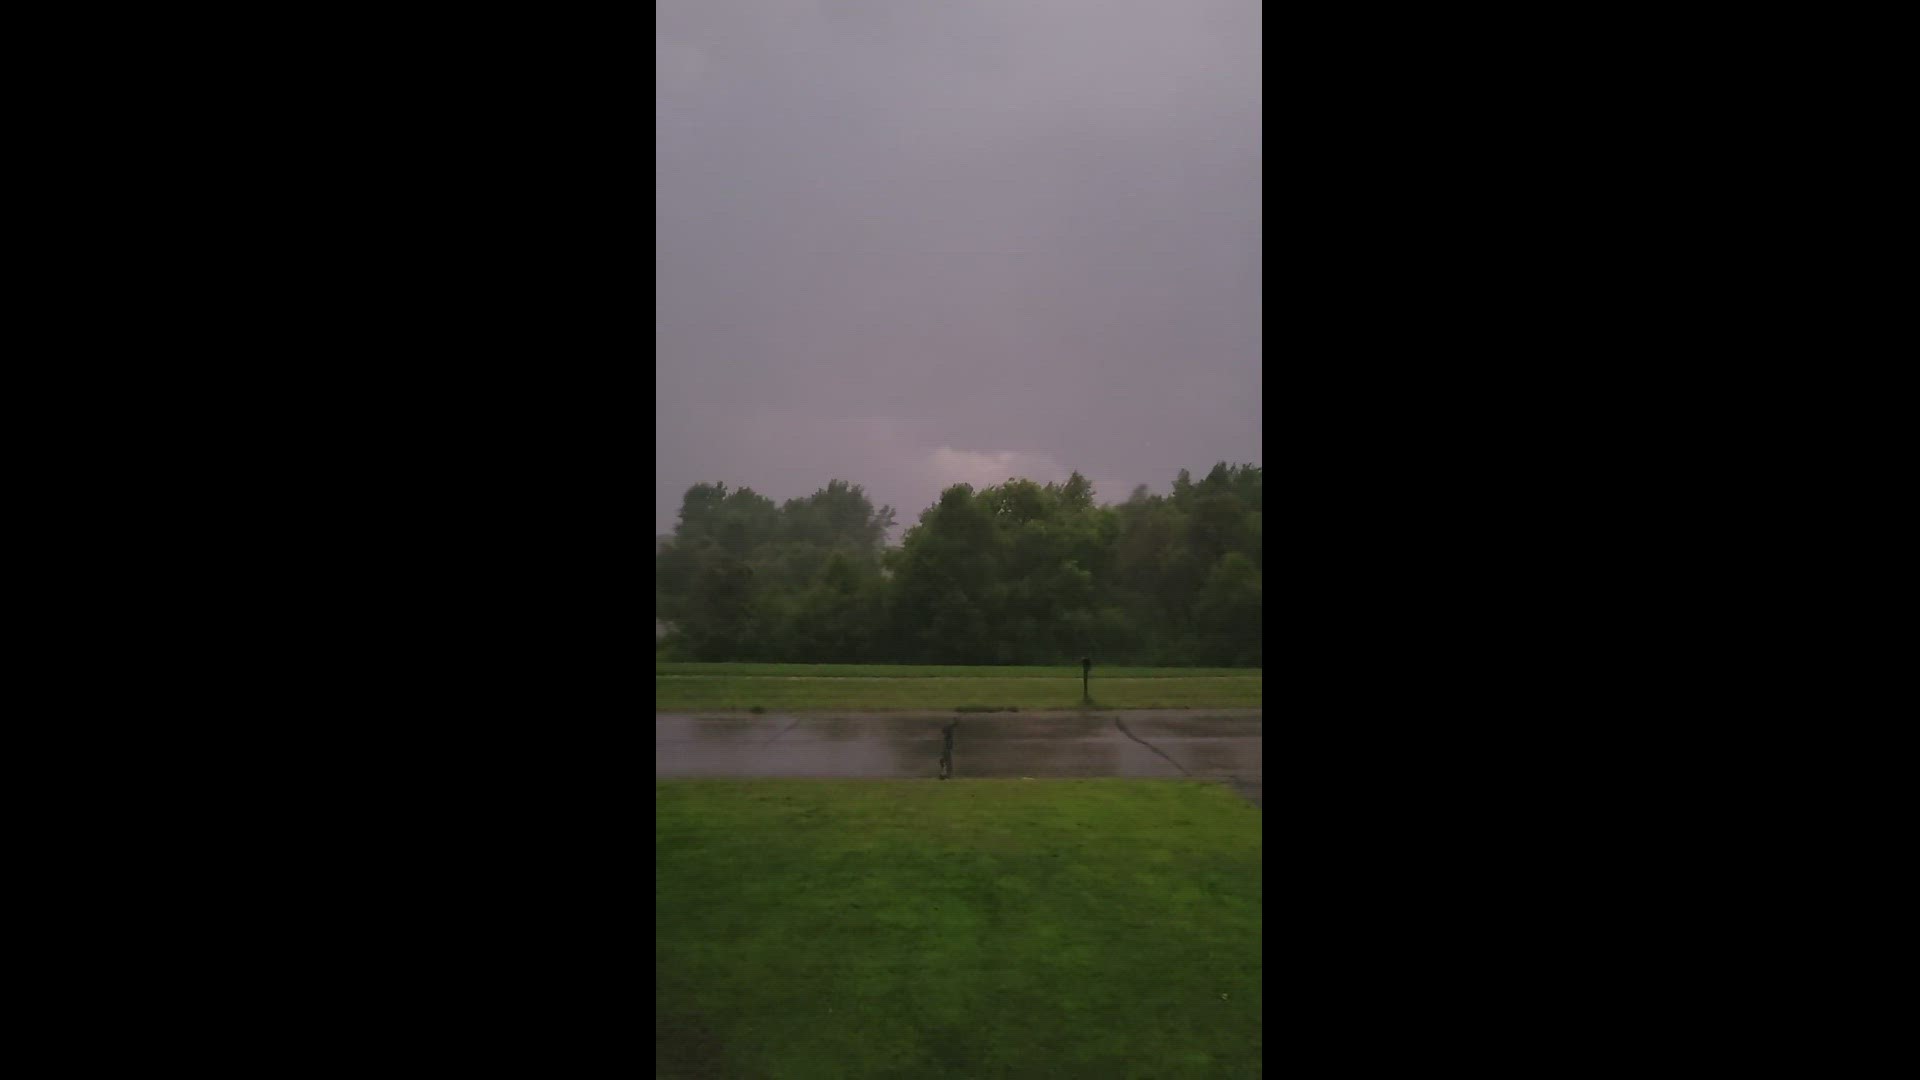 Thunderstorms near Cedar Springs
Credit: Amy Bonjour